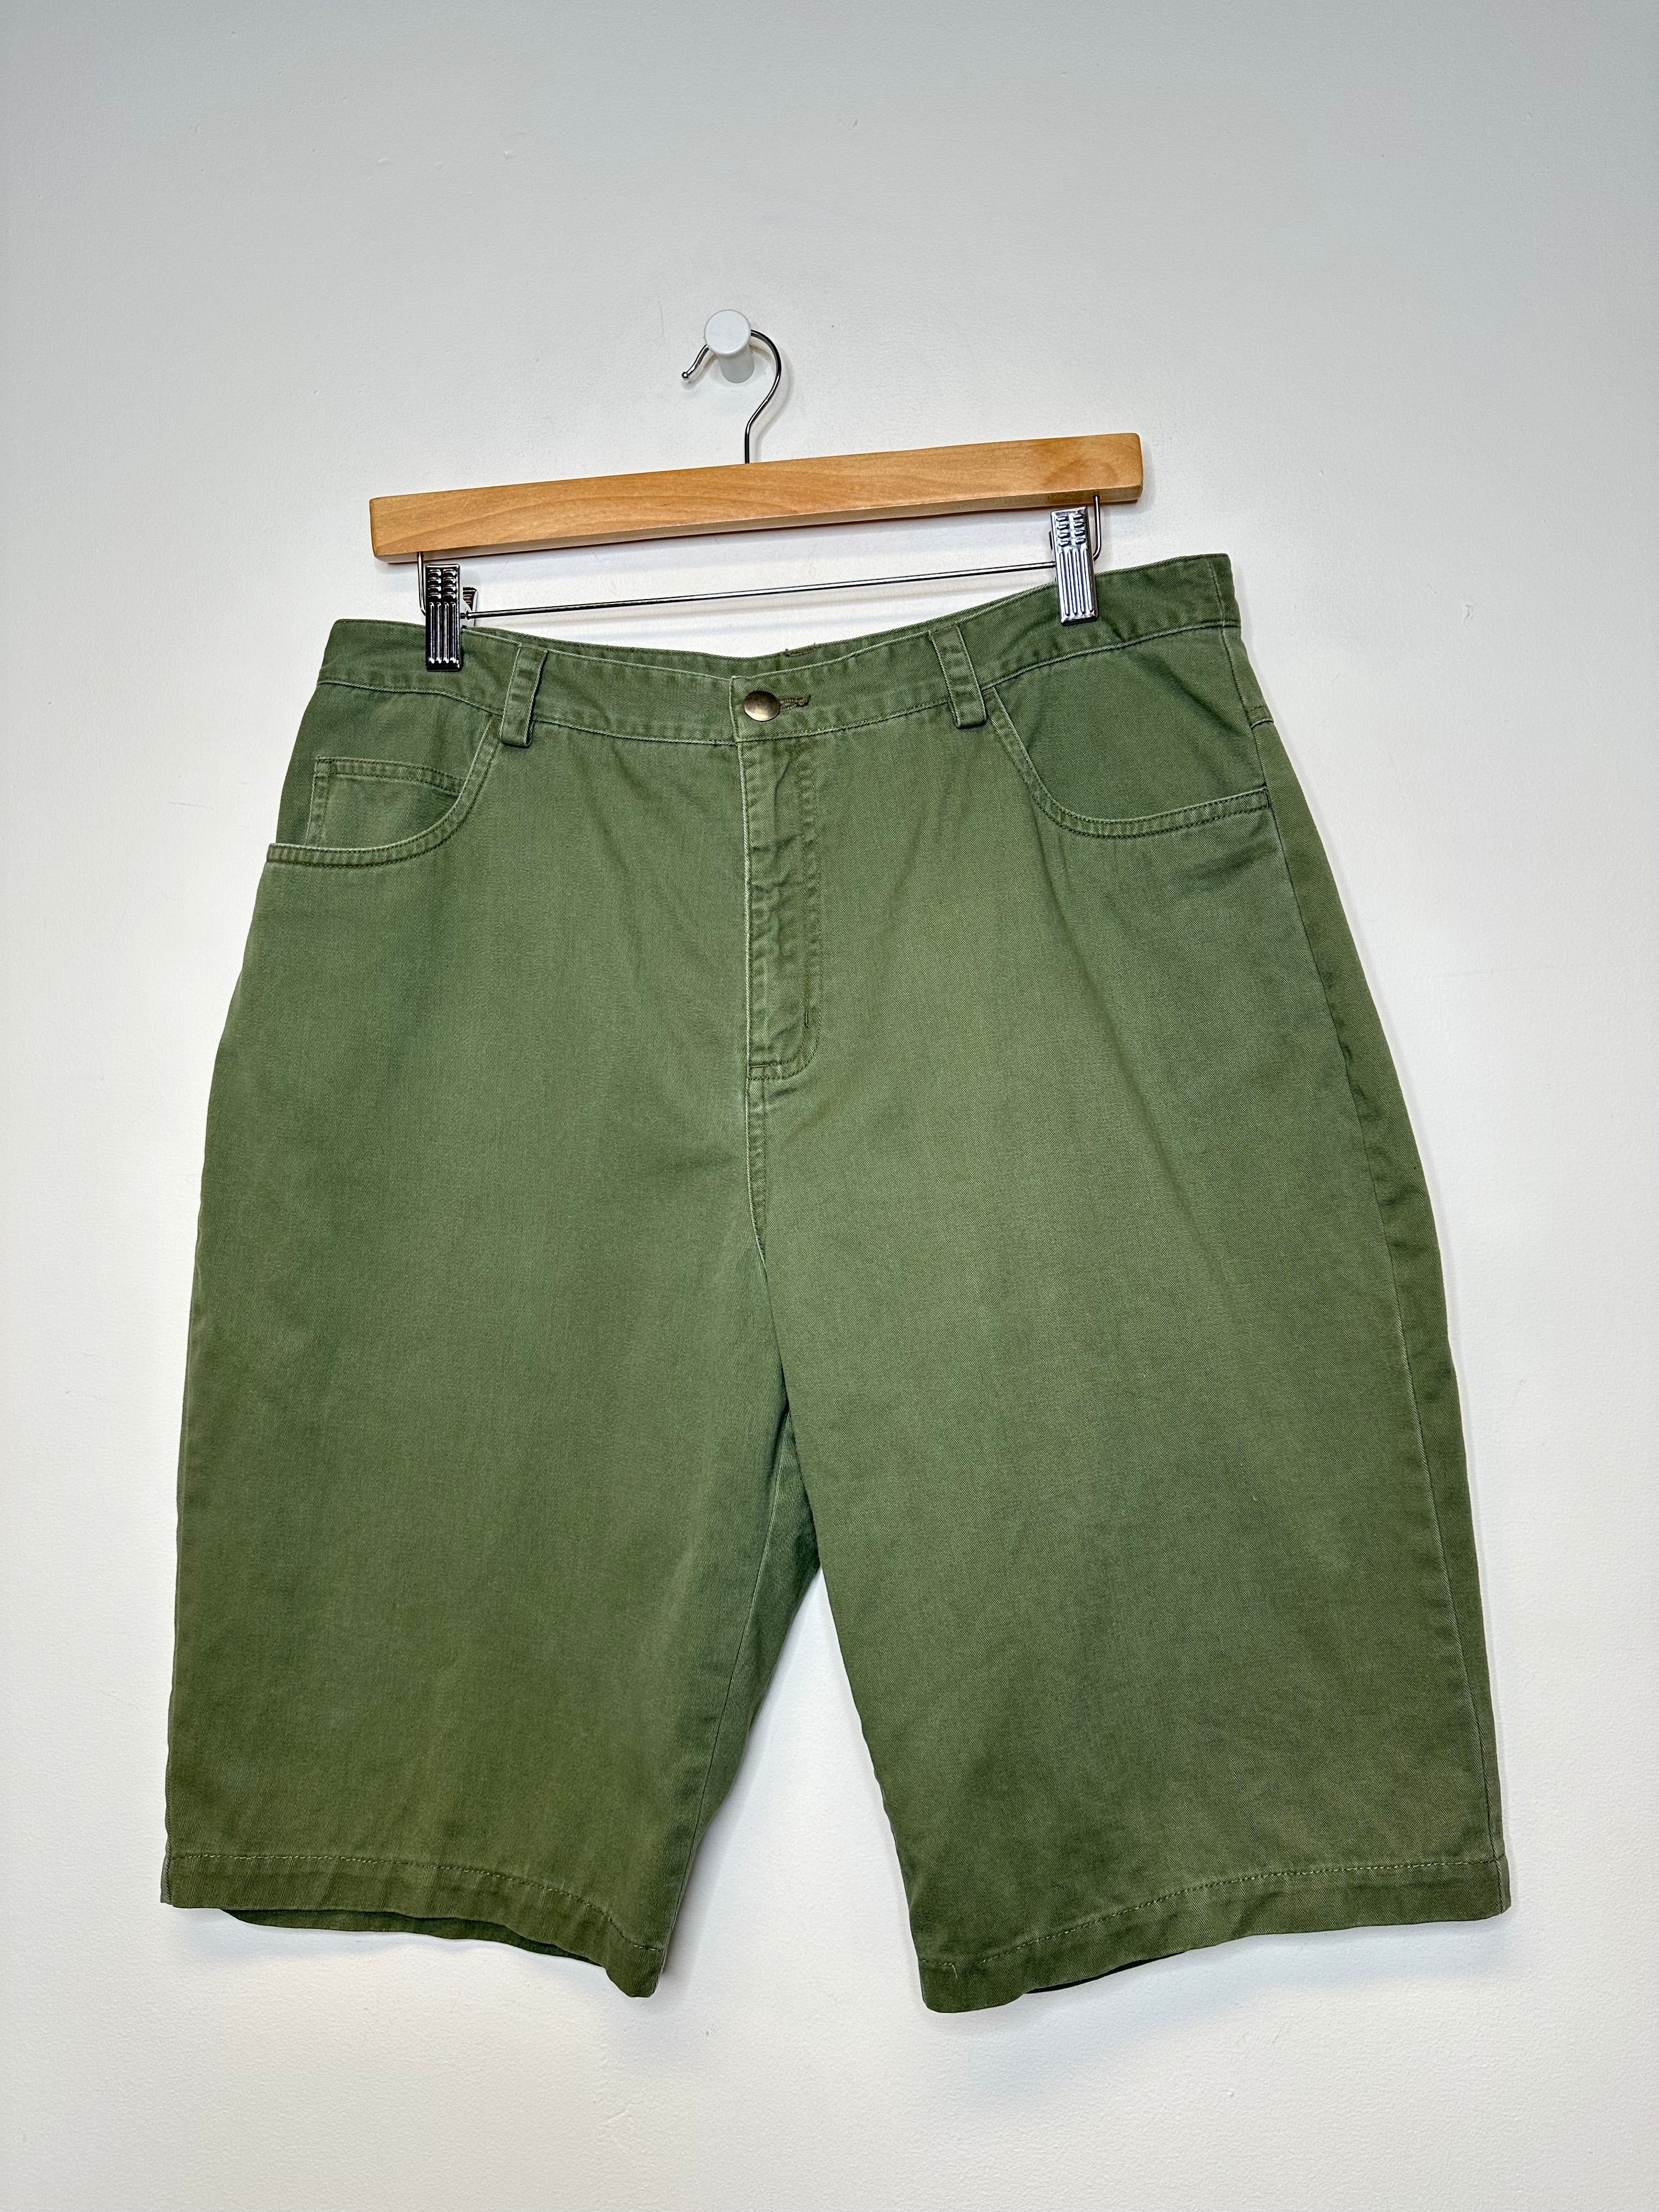 Vintage Army Green Shorts - L/34